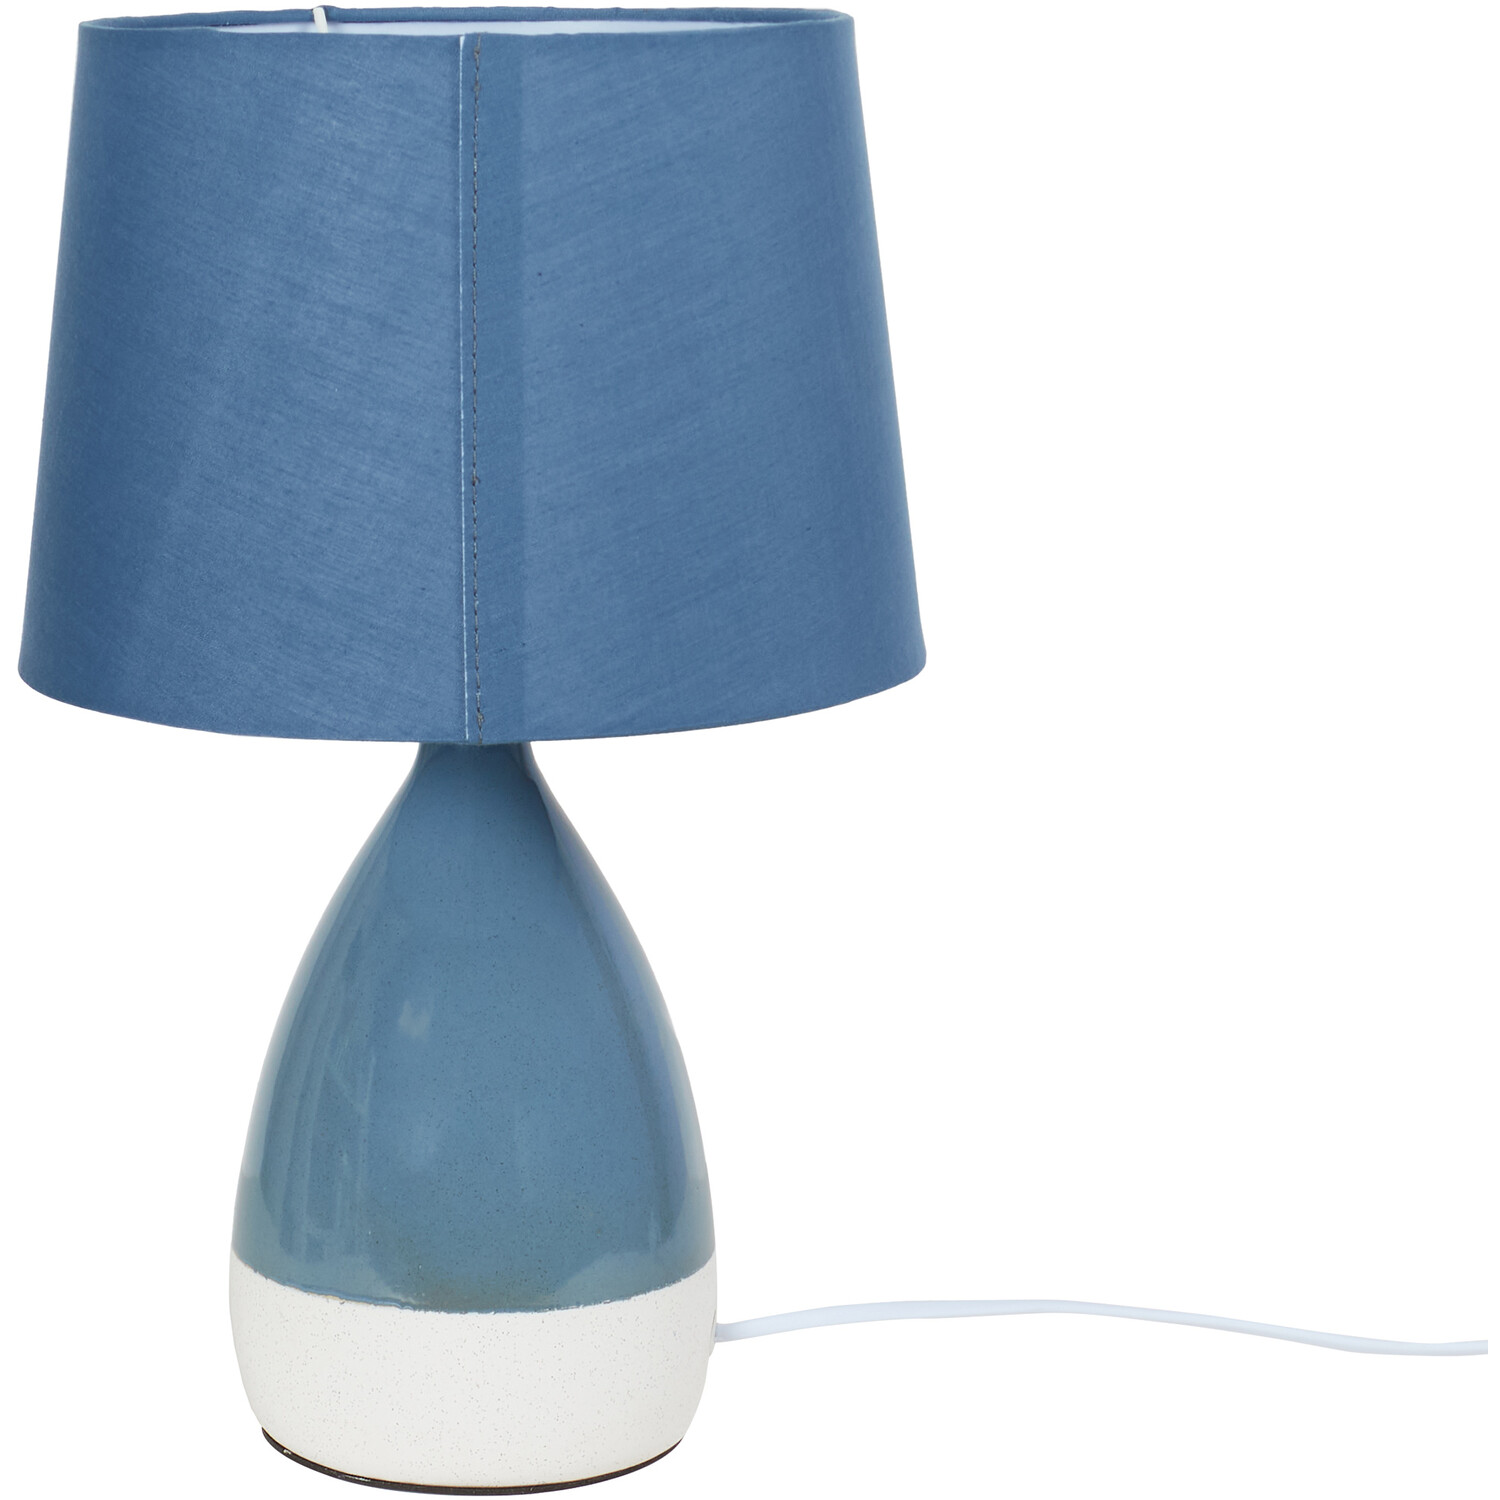 Onda Table Lamp - Blue Image 1